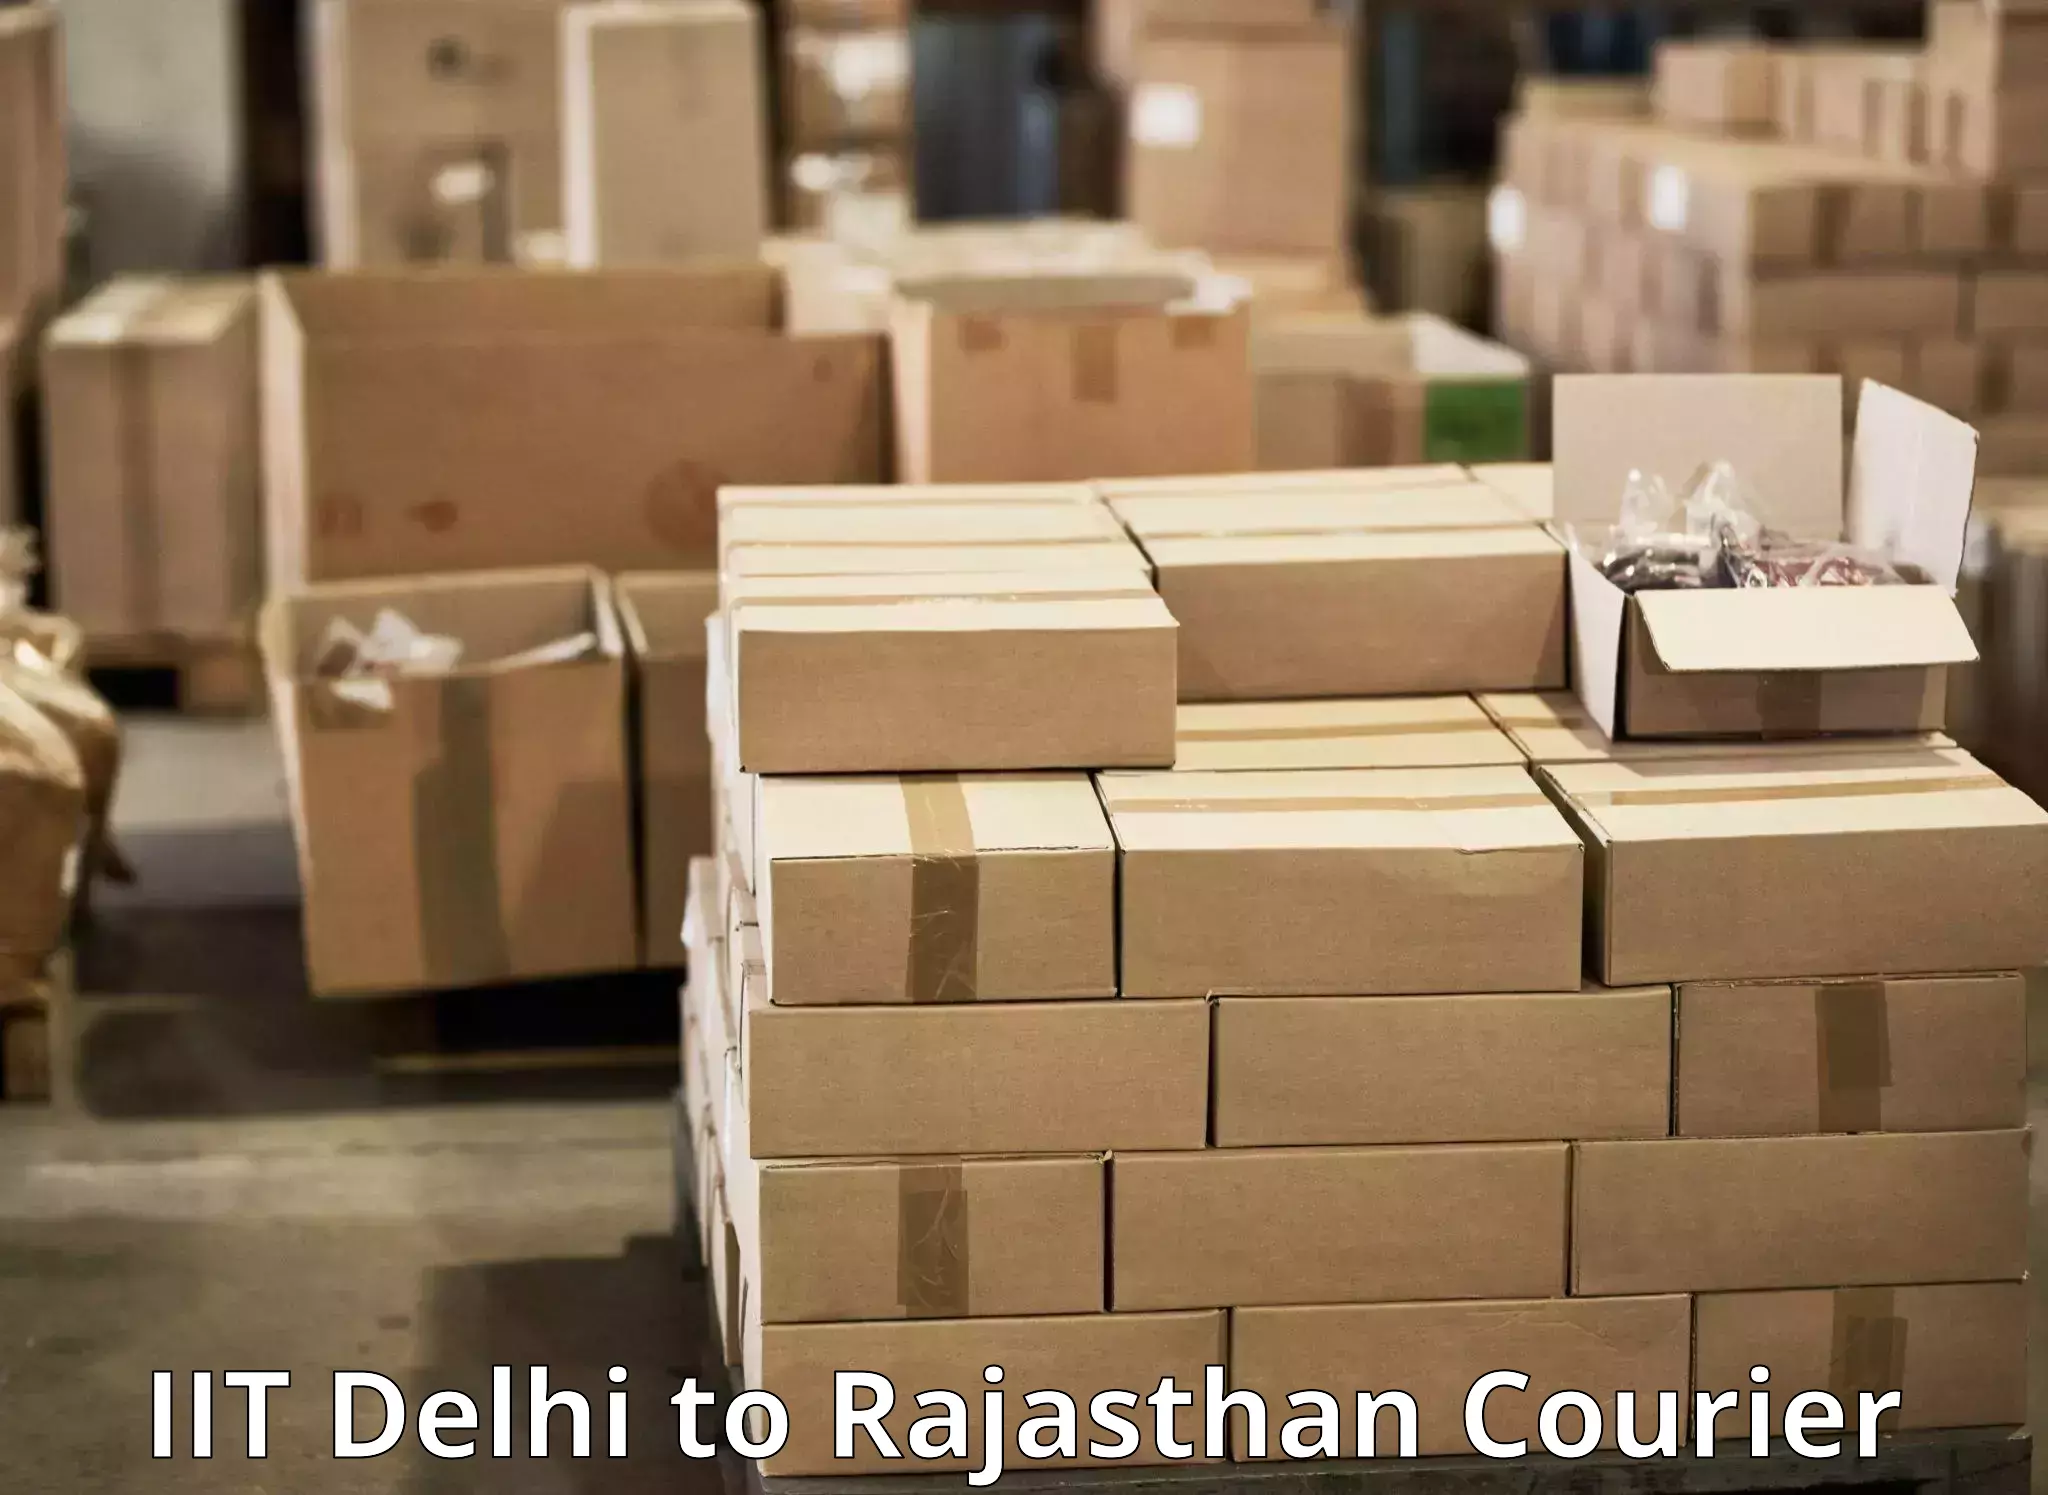 Global shipping networks IIT Delhi to Bonli